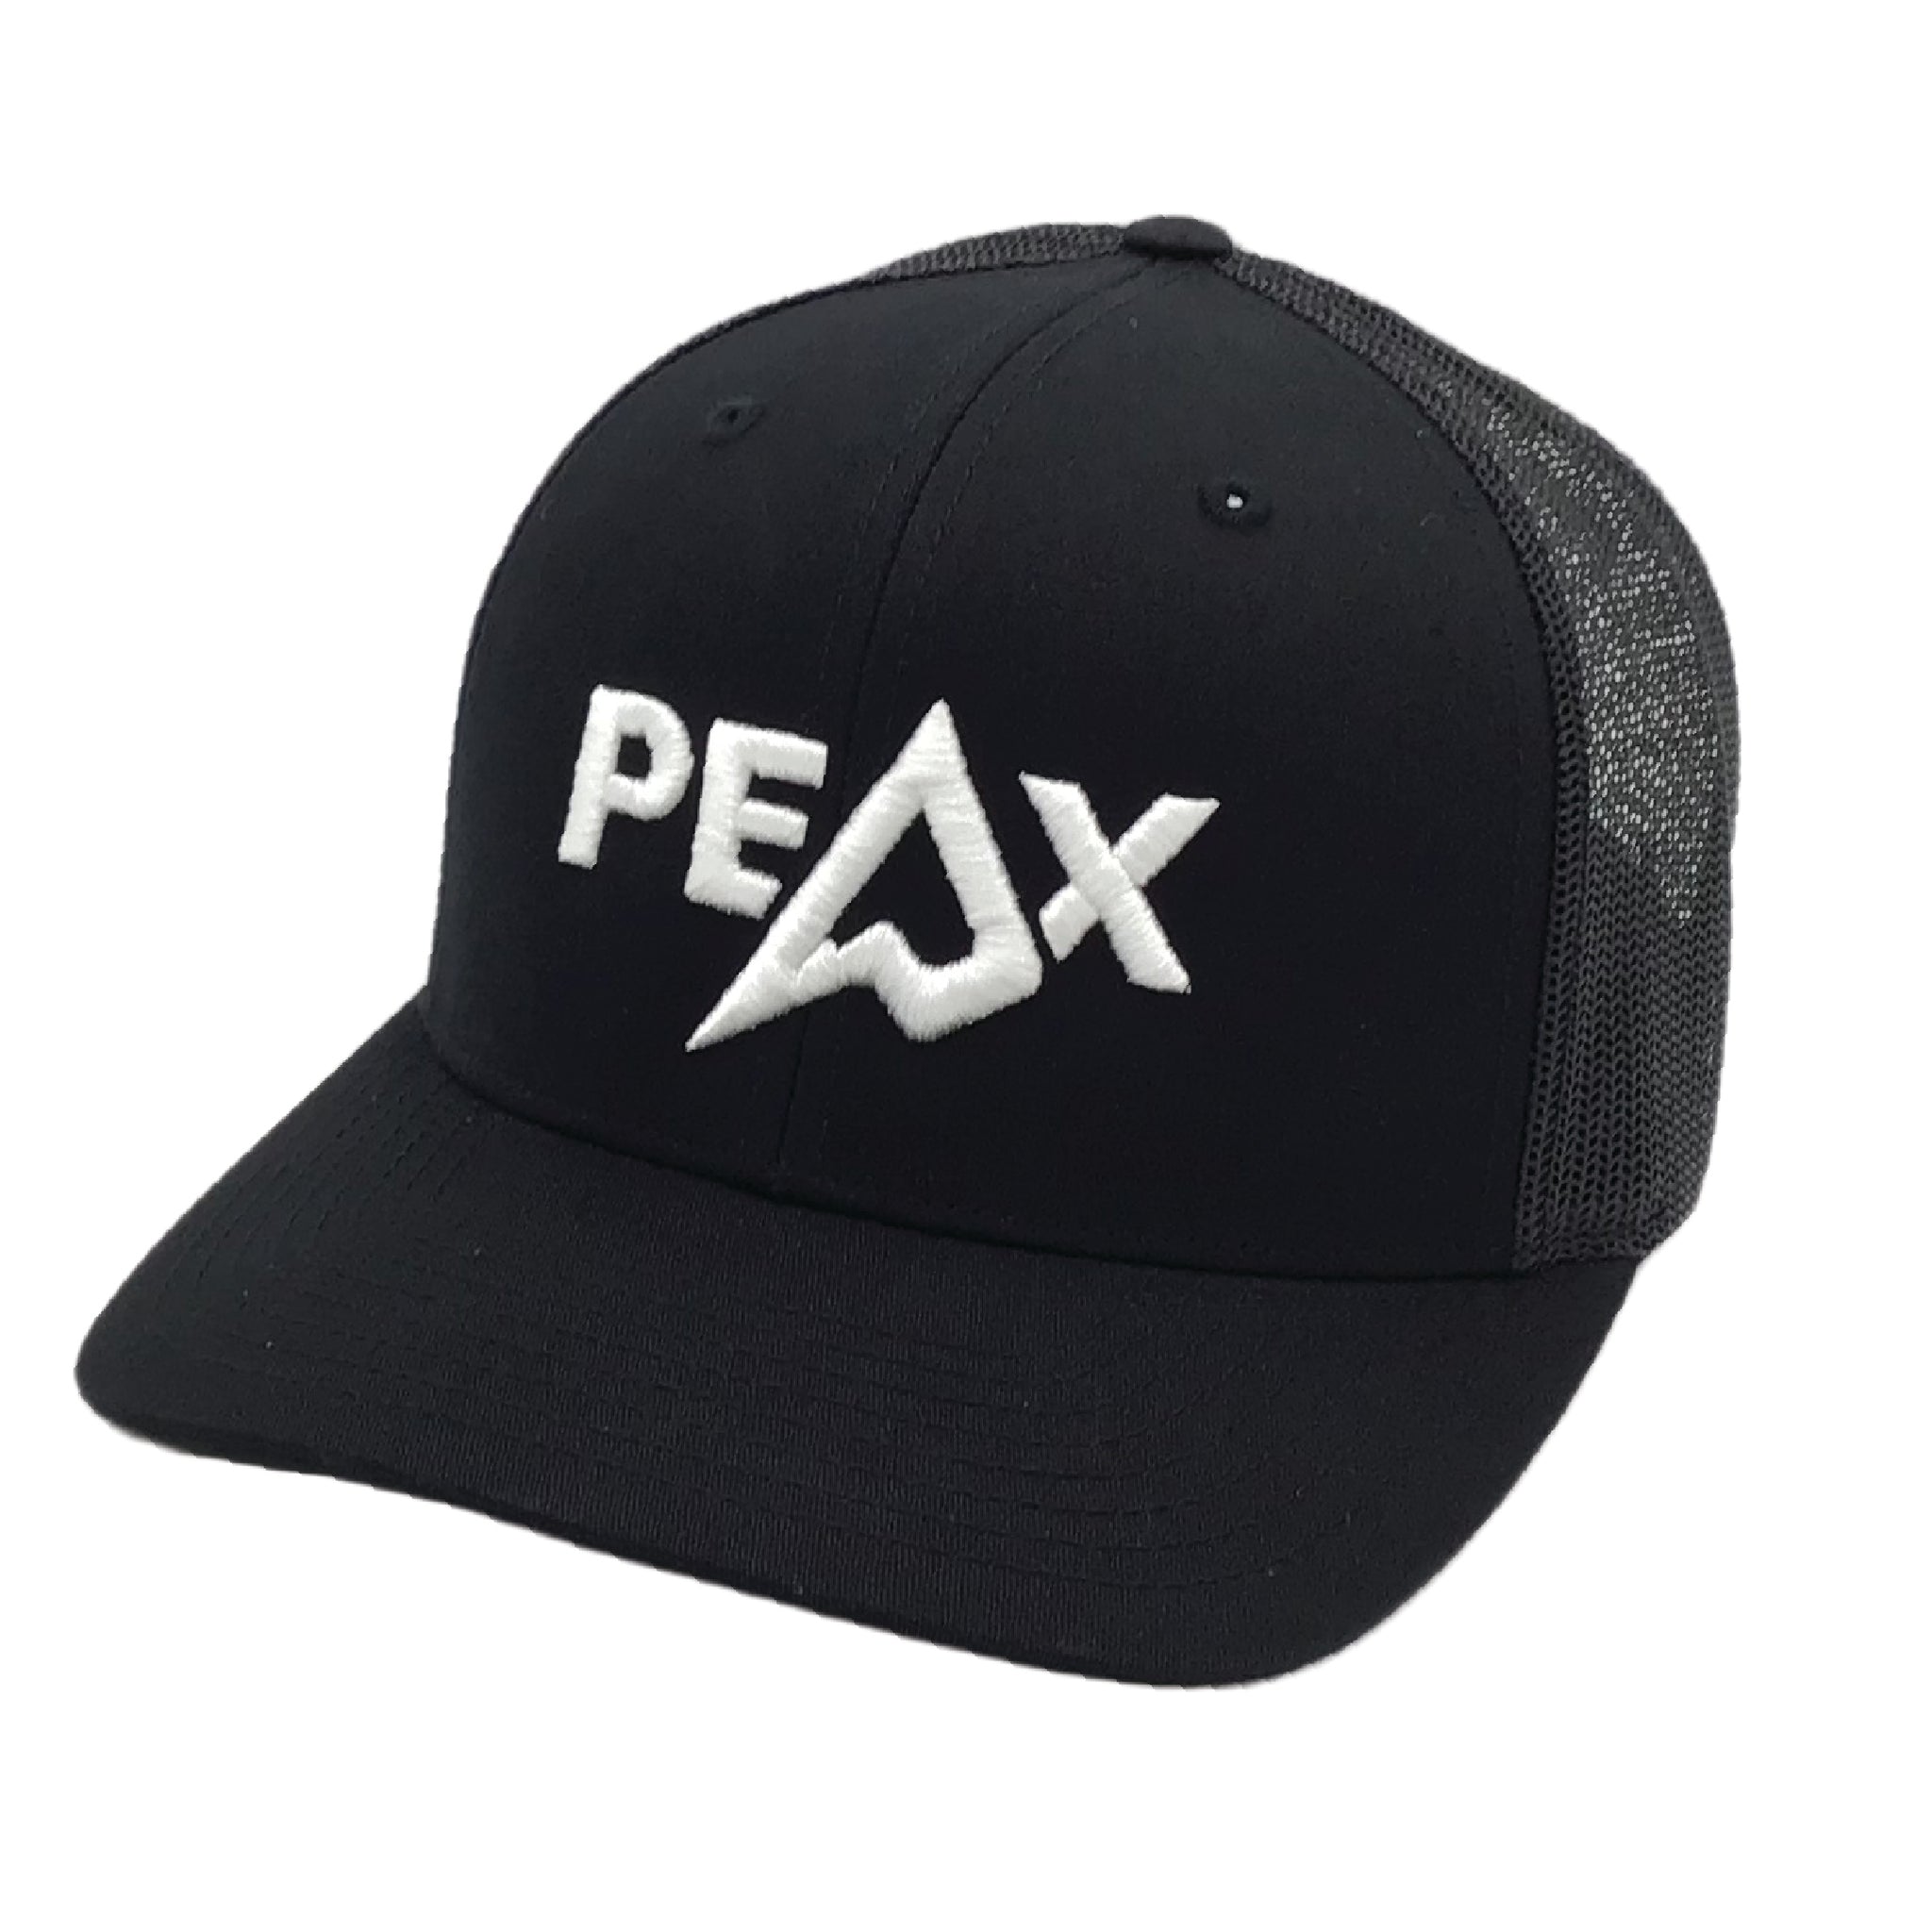 PEAX PINNACLE HAT (Black/White)